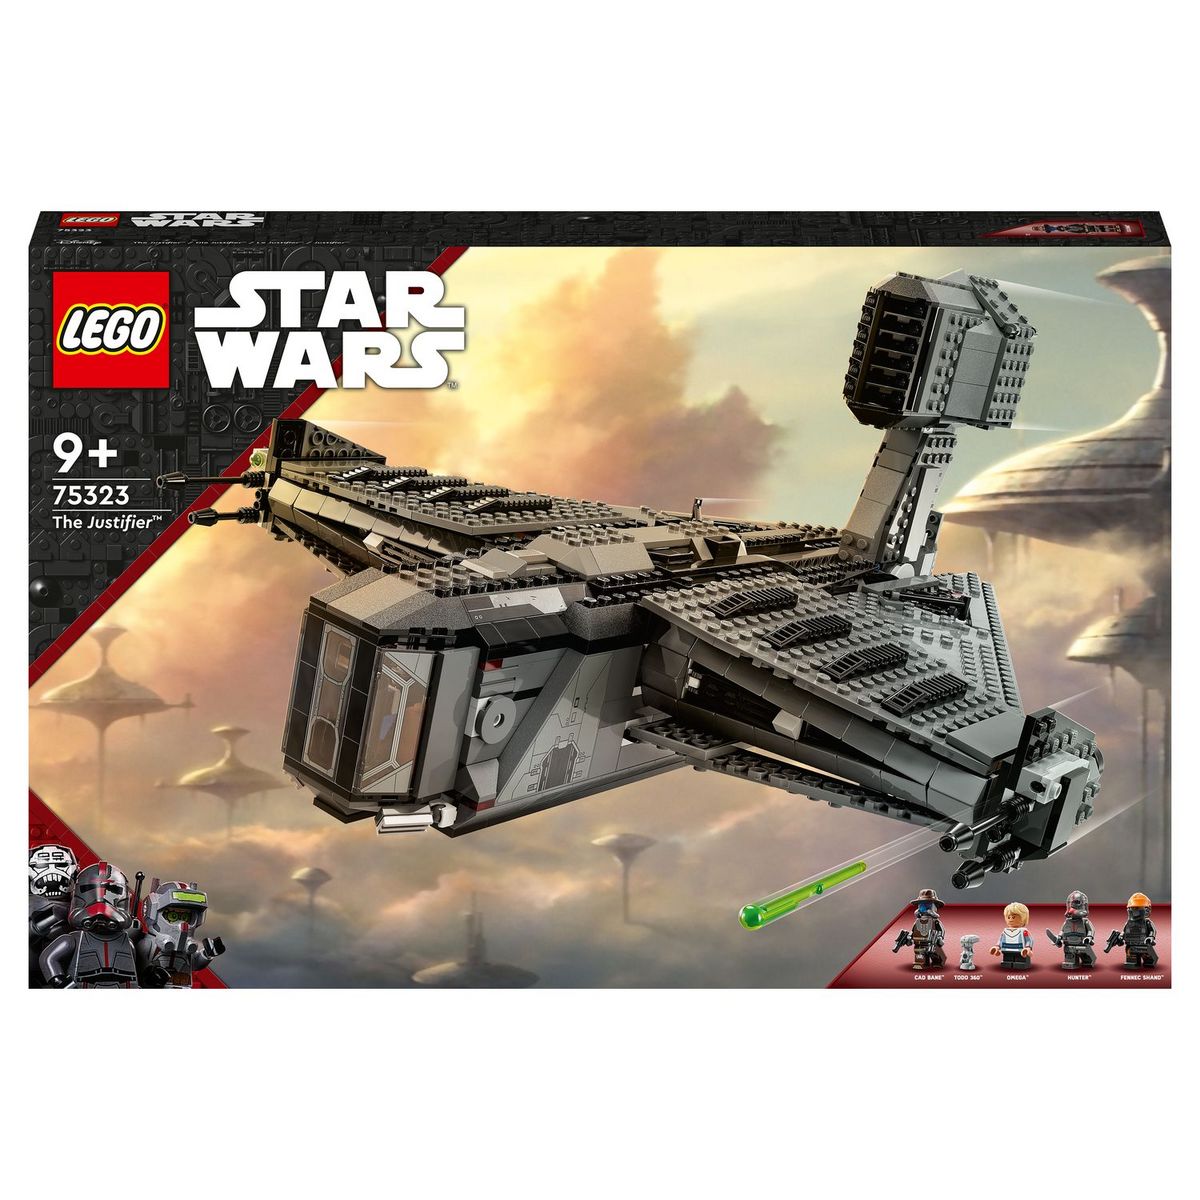 LEGO Star wars 75323 Le justifier, Jouet de Vaisseau Spatial, Construire, Figurine de Droïde